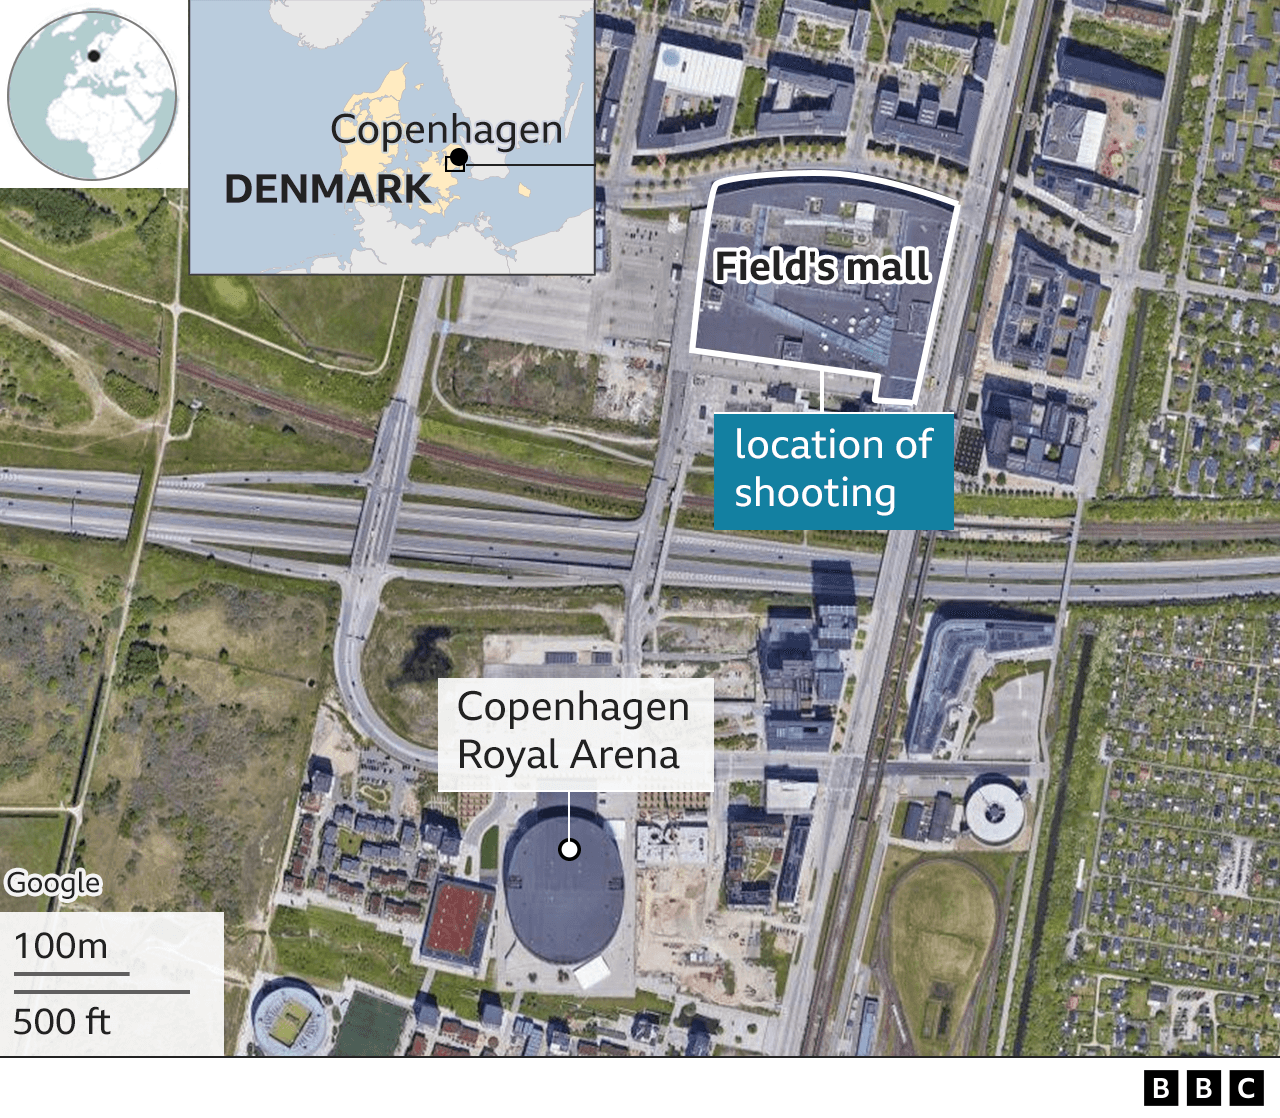 Copenhagen shooting: Shopping mall gunman charged with murder